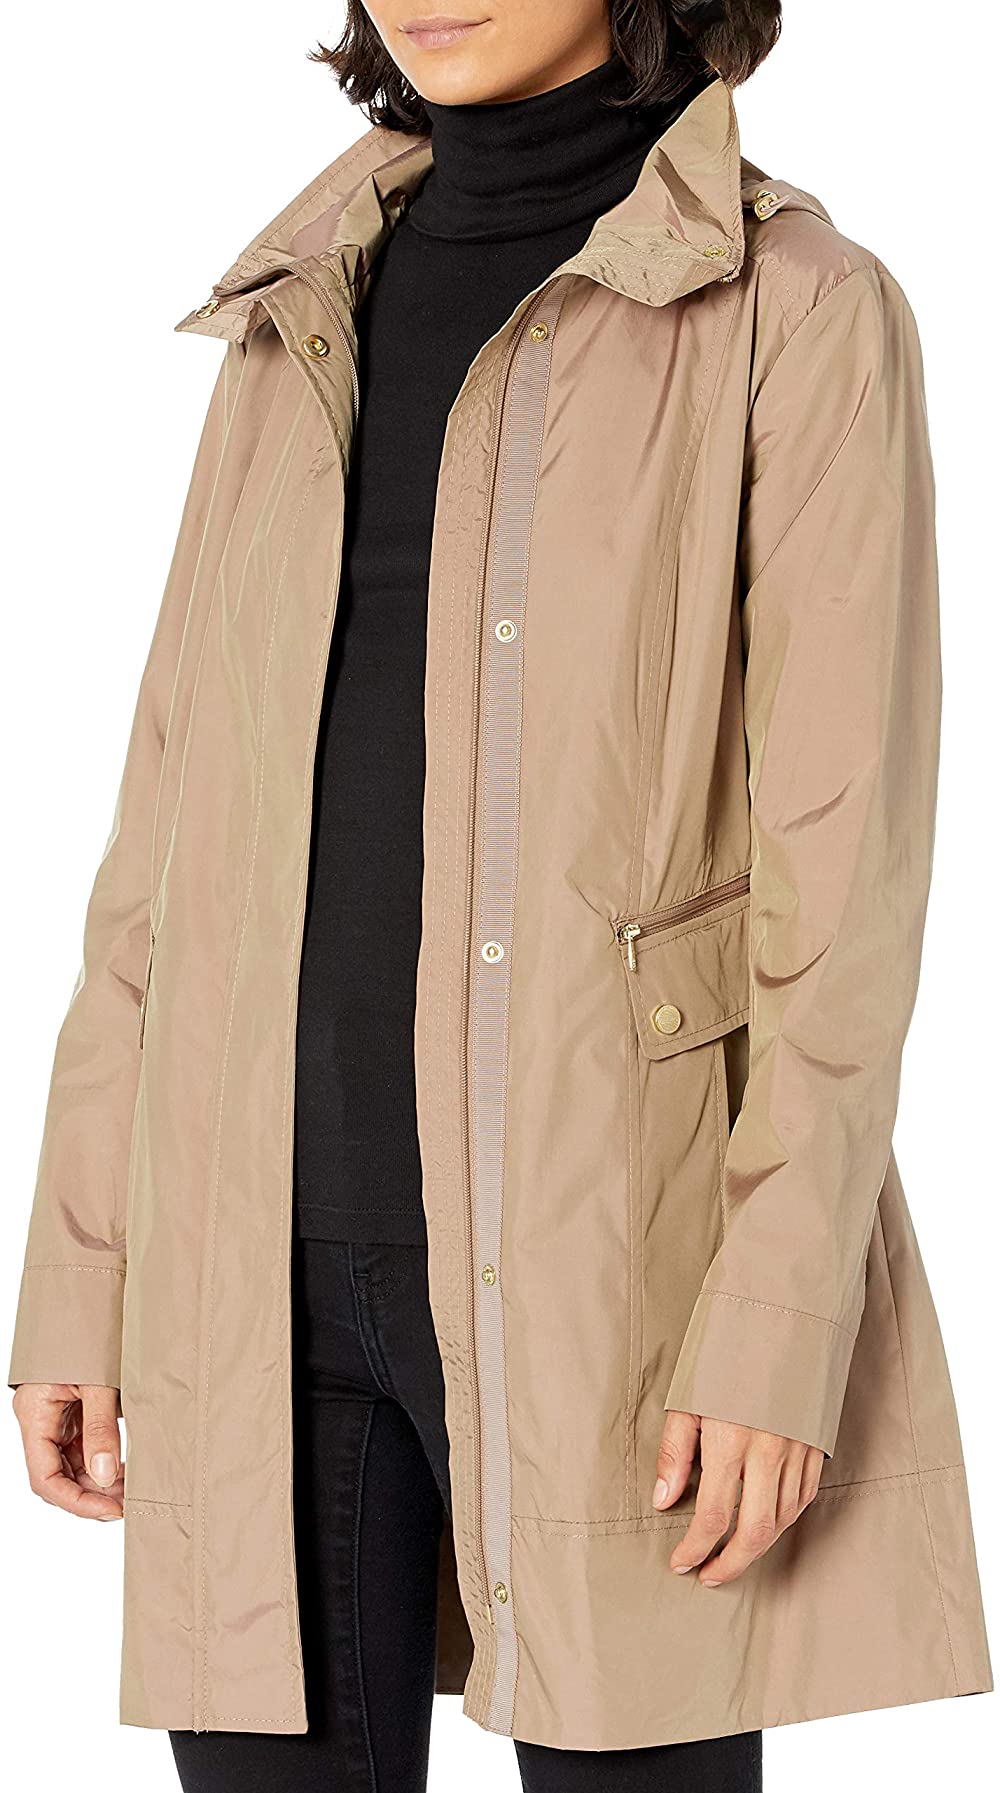 New Womens Hooded Glossy Fashion Lightweight Rain Mac Jacket Coat 